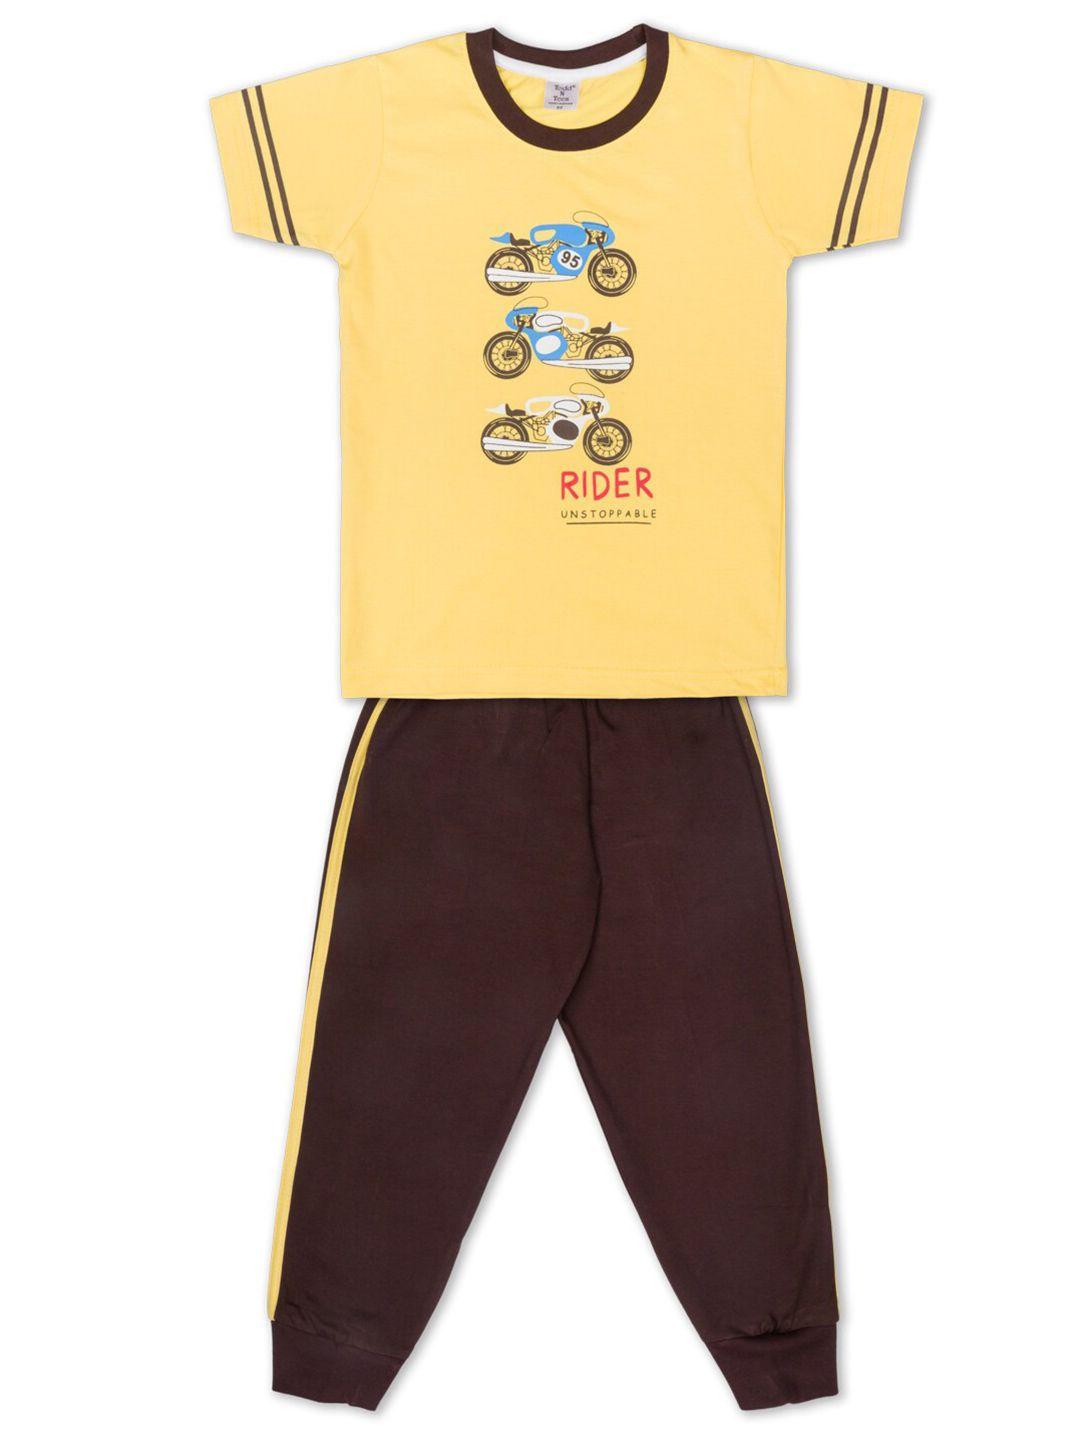 todd n teen boys yellow & coffee brown printed short sleeve clothing set set